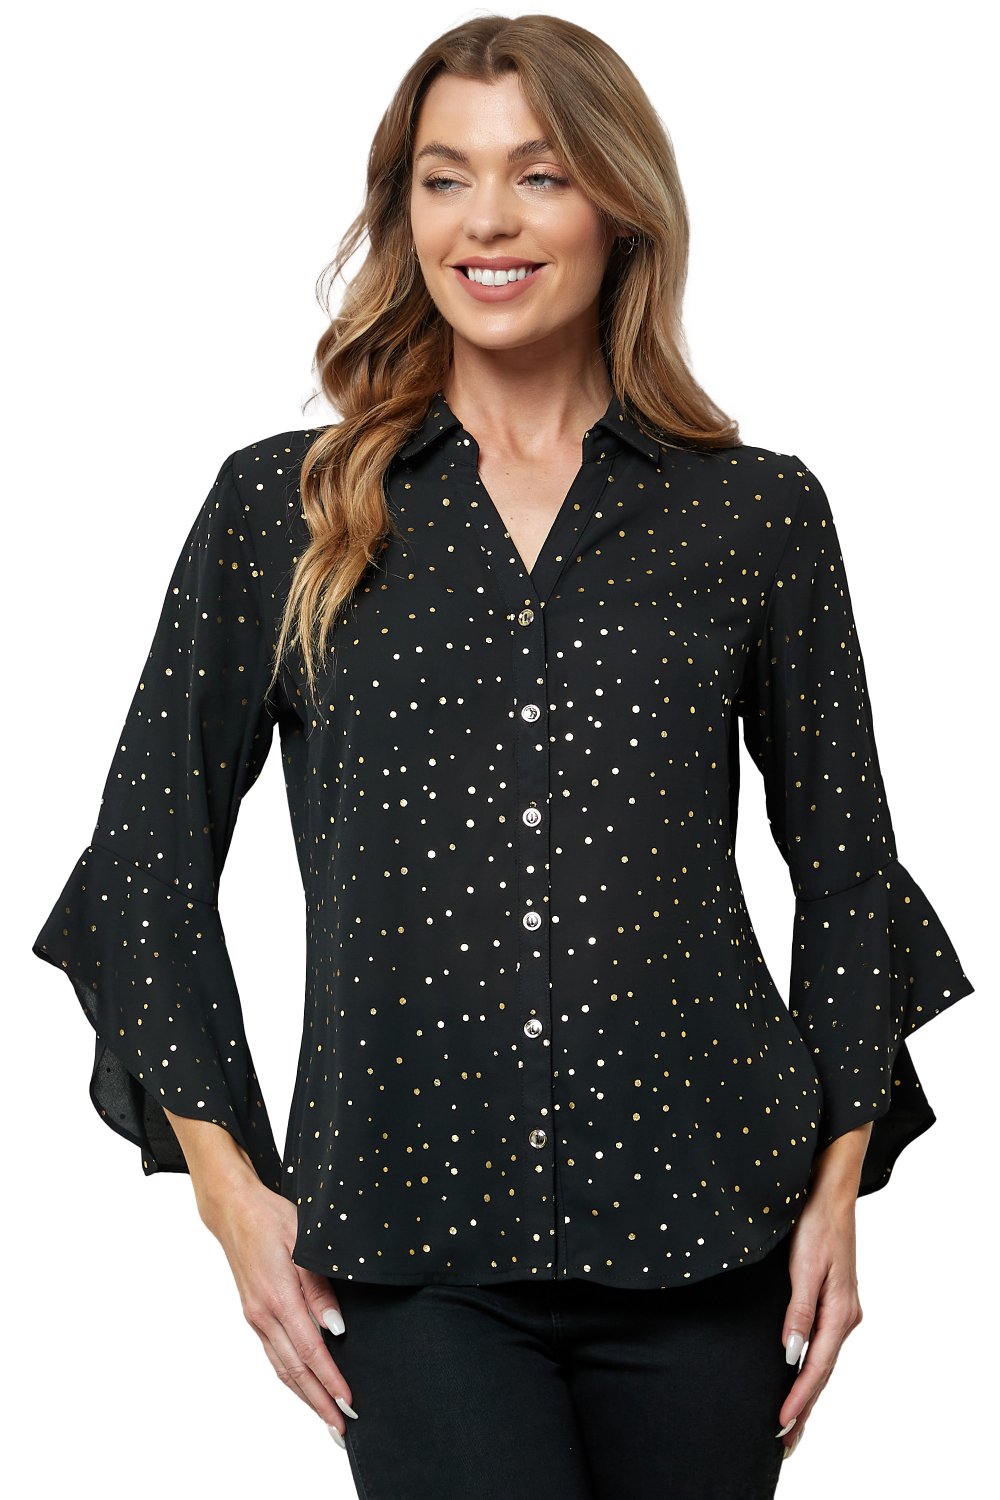 Sara Michelle 3/4 Ruffle Sleeve Johnny Collar Button Front Blouse - DressbarnShirts & Blouses